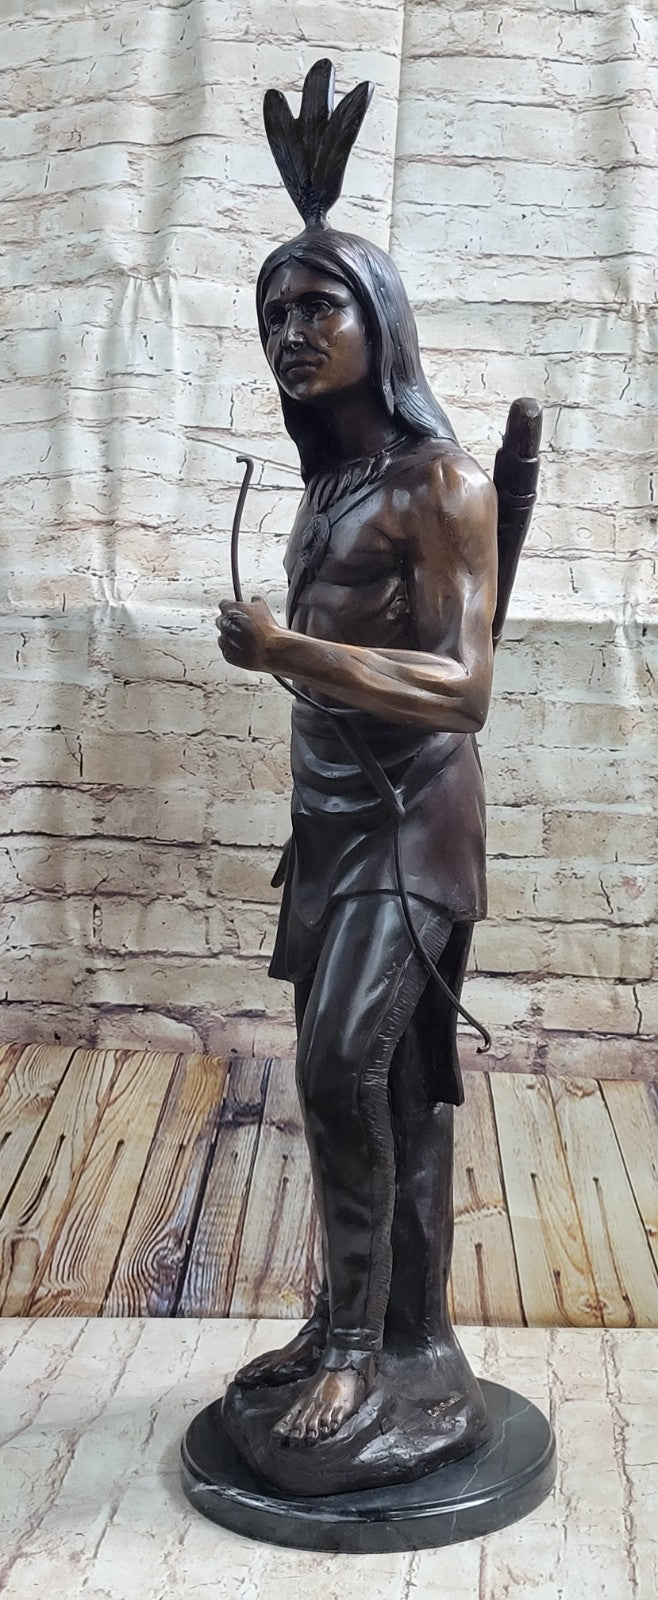 American Indian Warrior 100% Solid Bronze Sculpture Art Figurine Statue Artwork